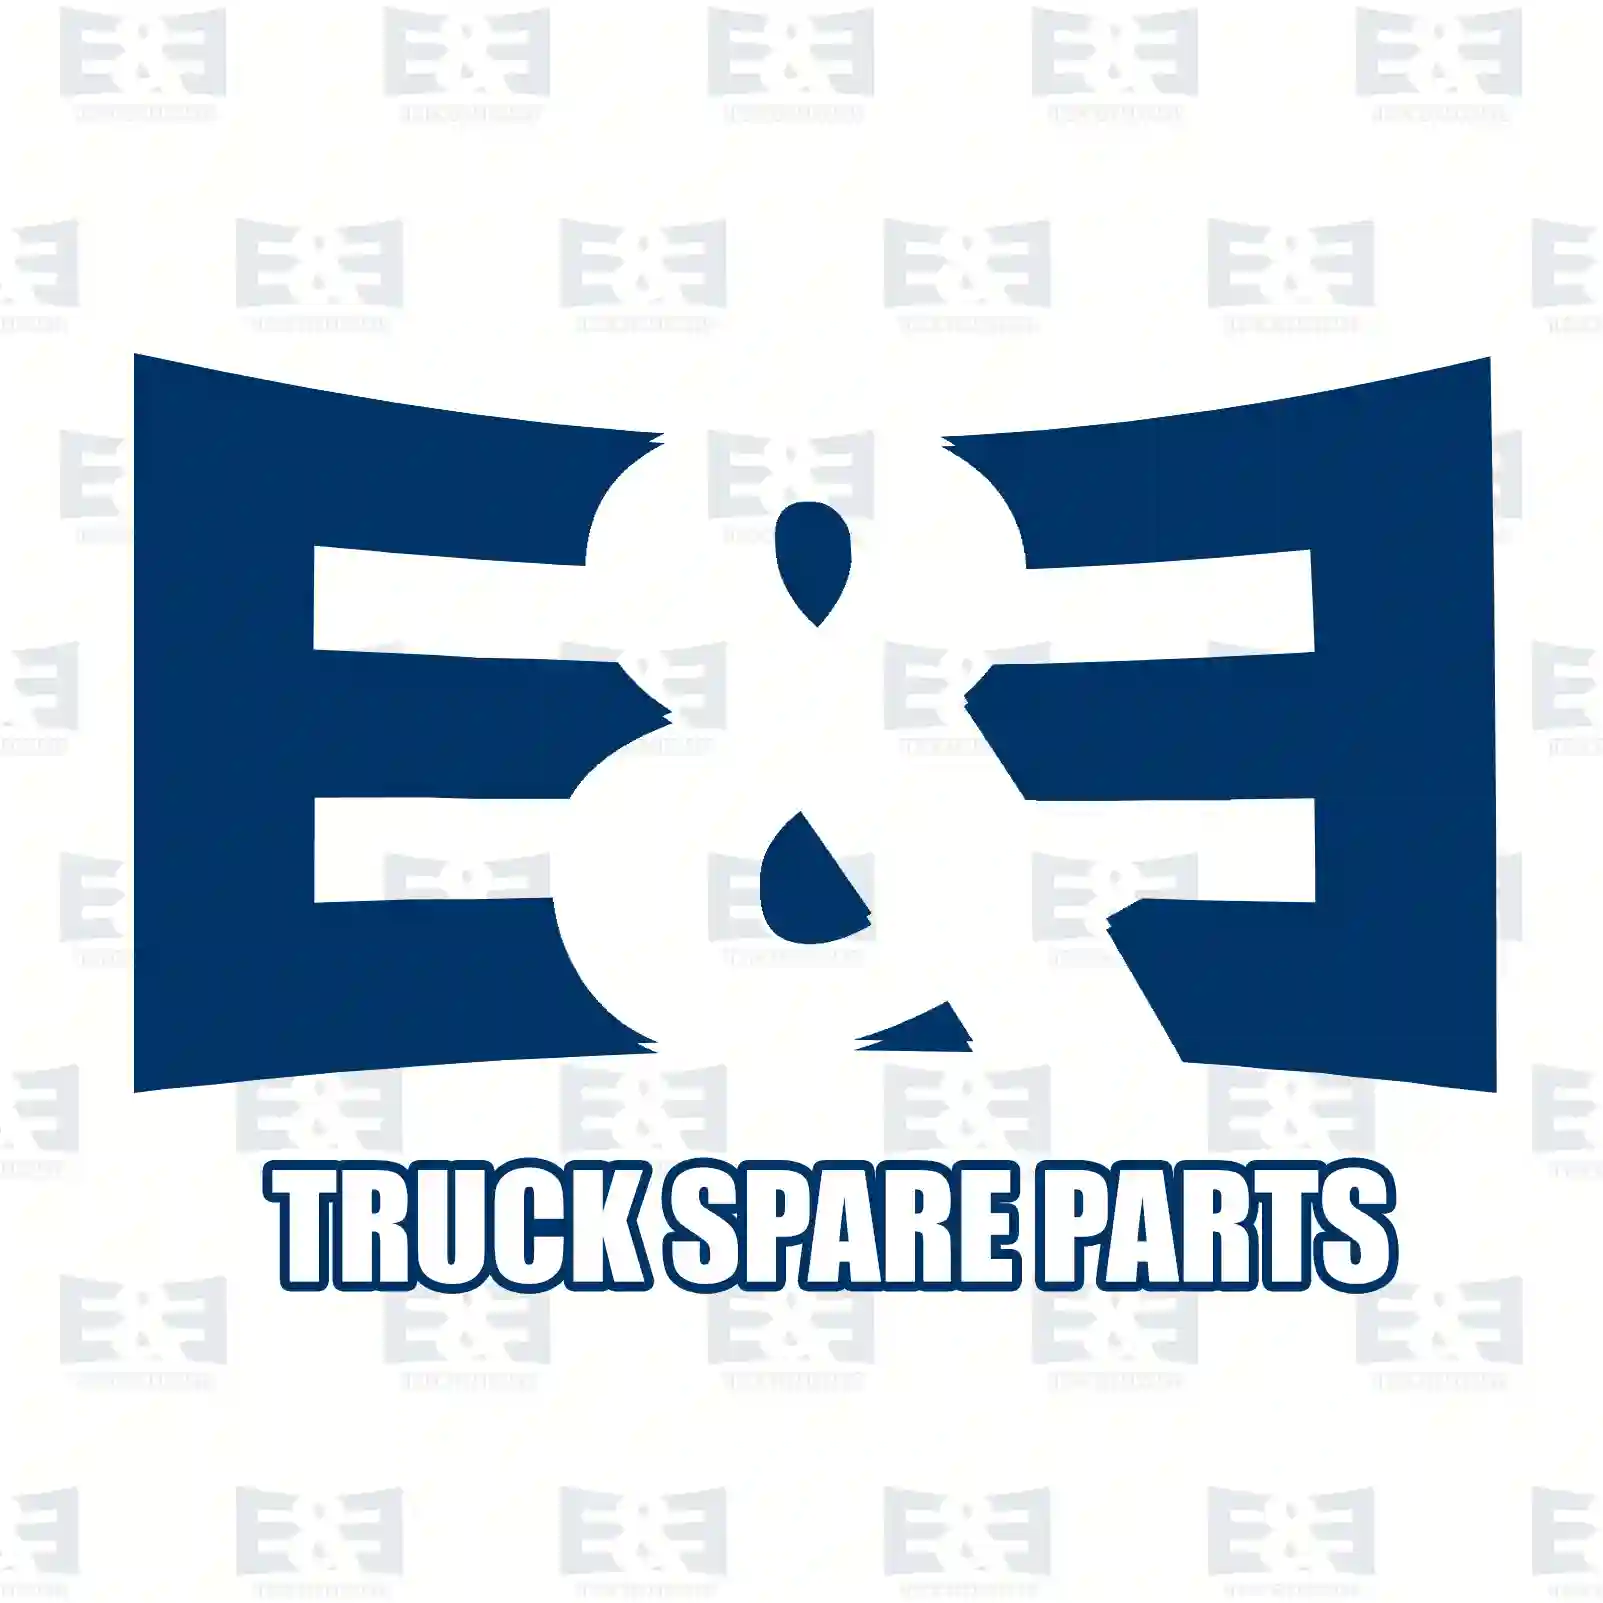 Exhaust gas temperature sensor, 2E2297890, 076906088, 076906088C, 076906088, 076906088C, 076906088, 076906088C, 076906088, 076906088C ||  2E2297890 E&E Truck Spare Parts | Truck Spare Parts, Auotomotive Spare Parts Exhaust gas temperature sensor, 2E2297890, 076906088, 076906088C, 076906088, 076906088C, 076906088, 076906088C, 076906088, 076906088C ||  2E2297890 E&E Truck Spare Parts | Truck Spare Parts, Auotomotive Spare Parts